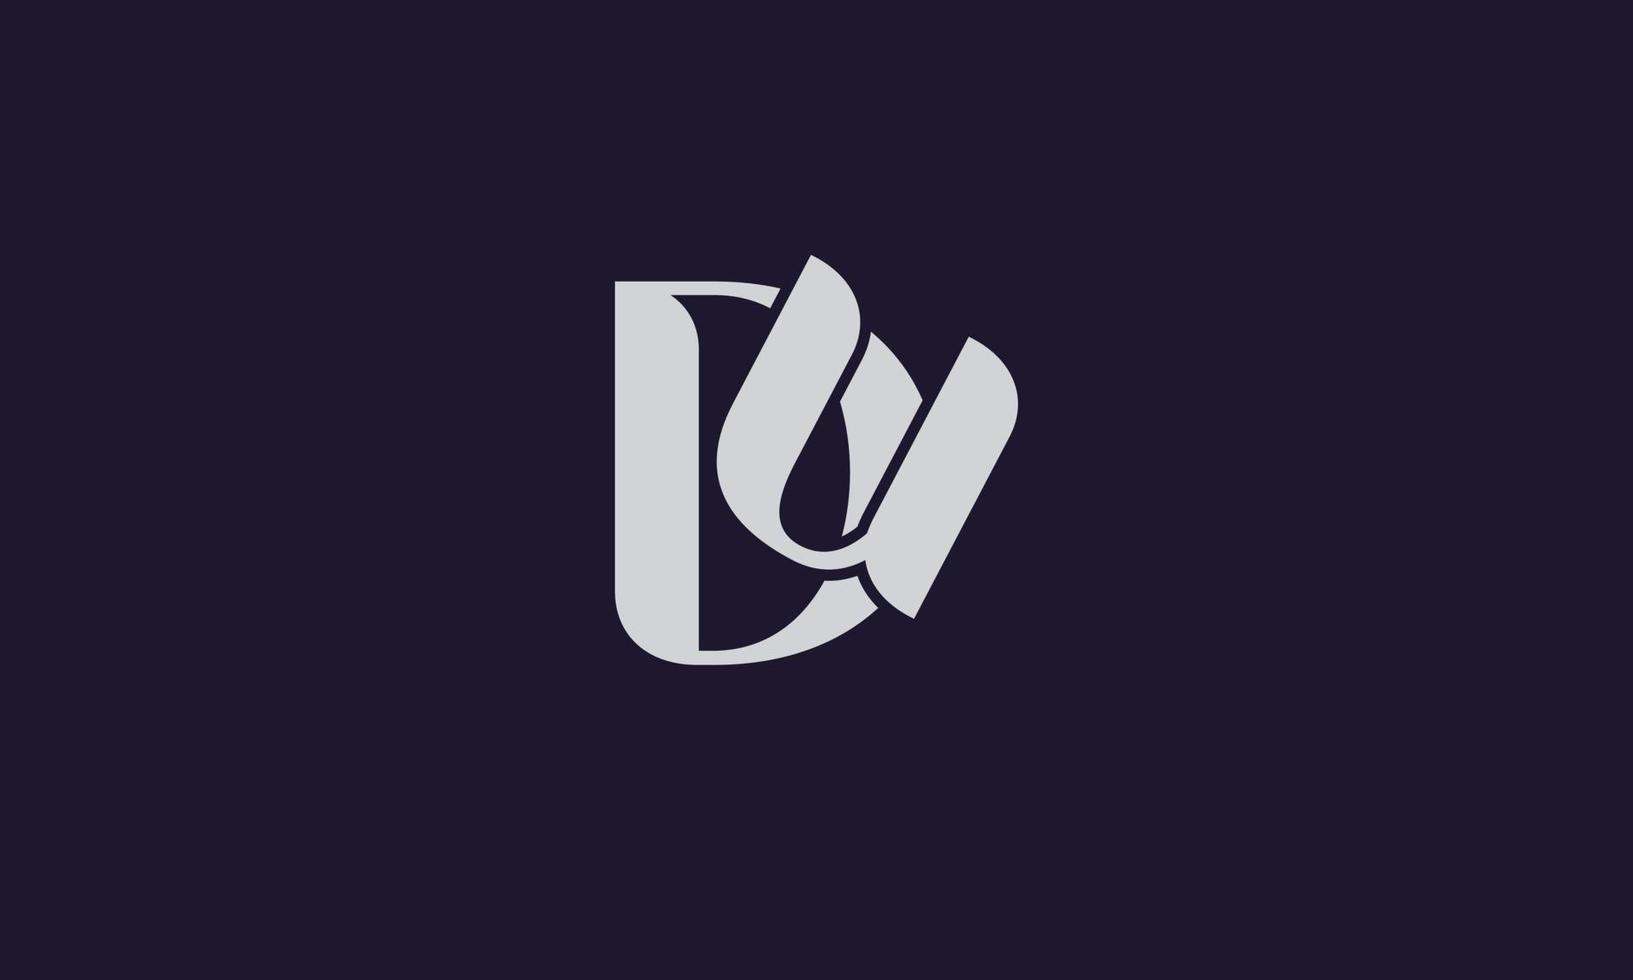 DU Alphabet letters Initials Monogram logo vector